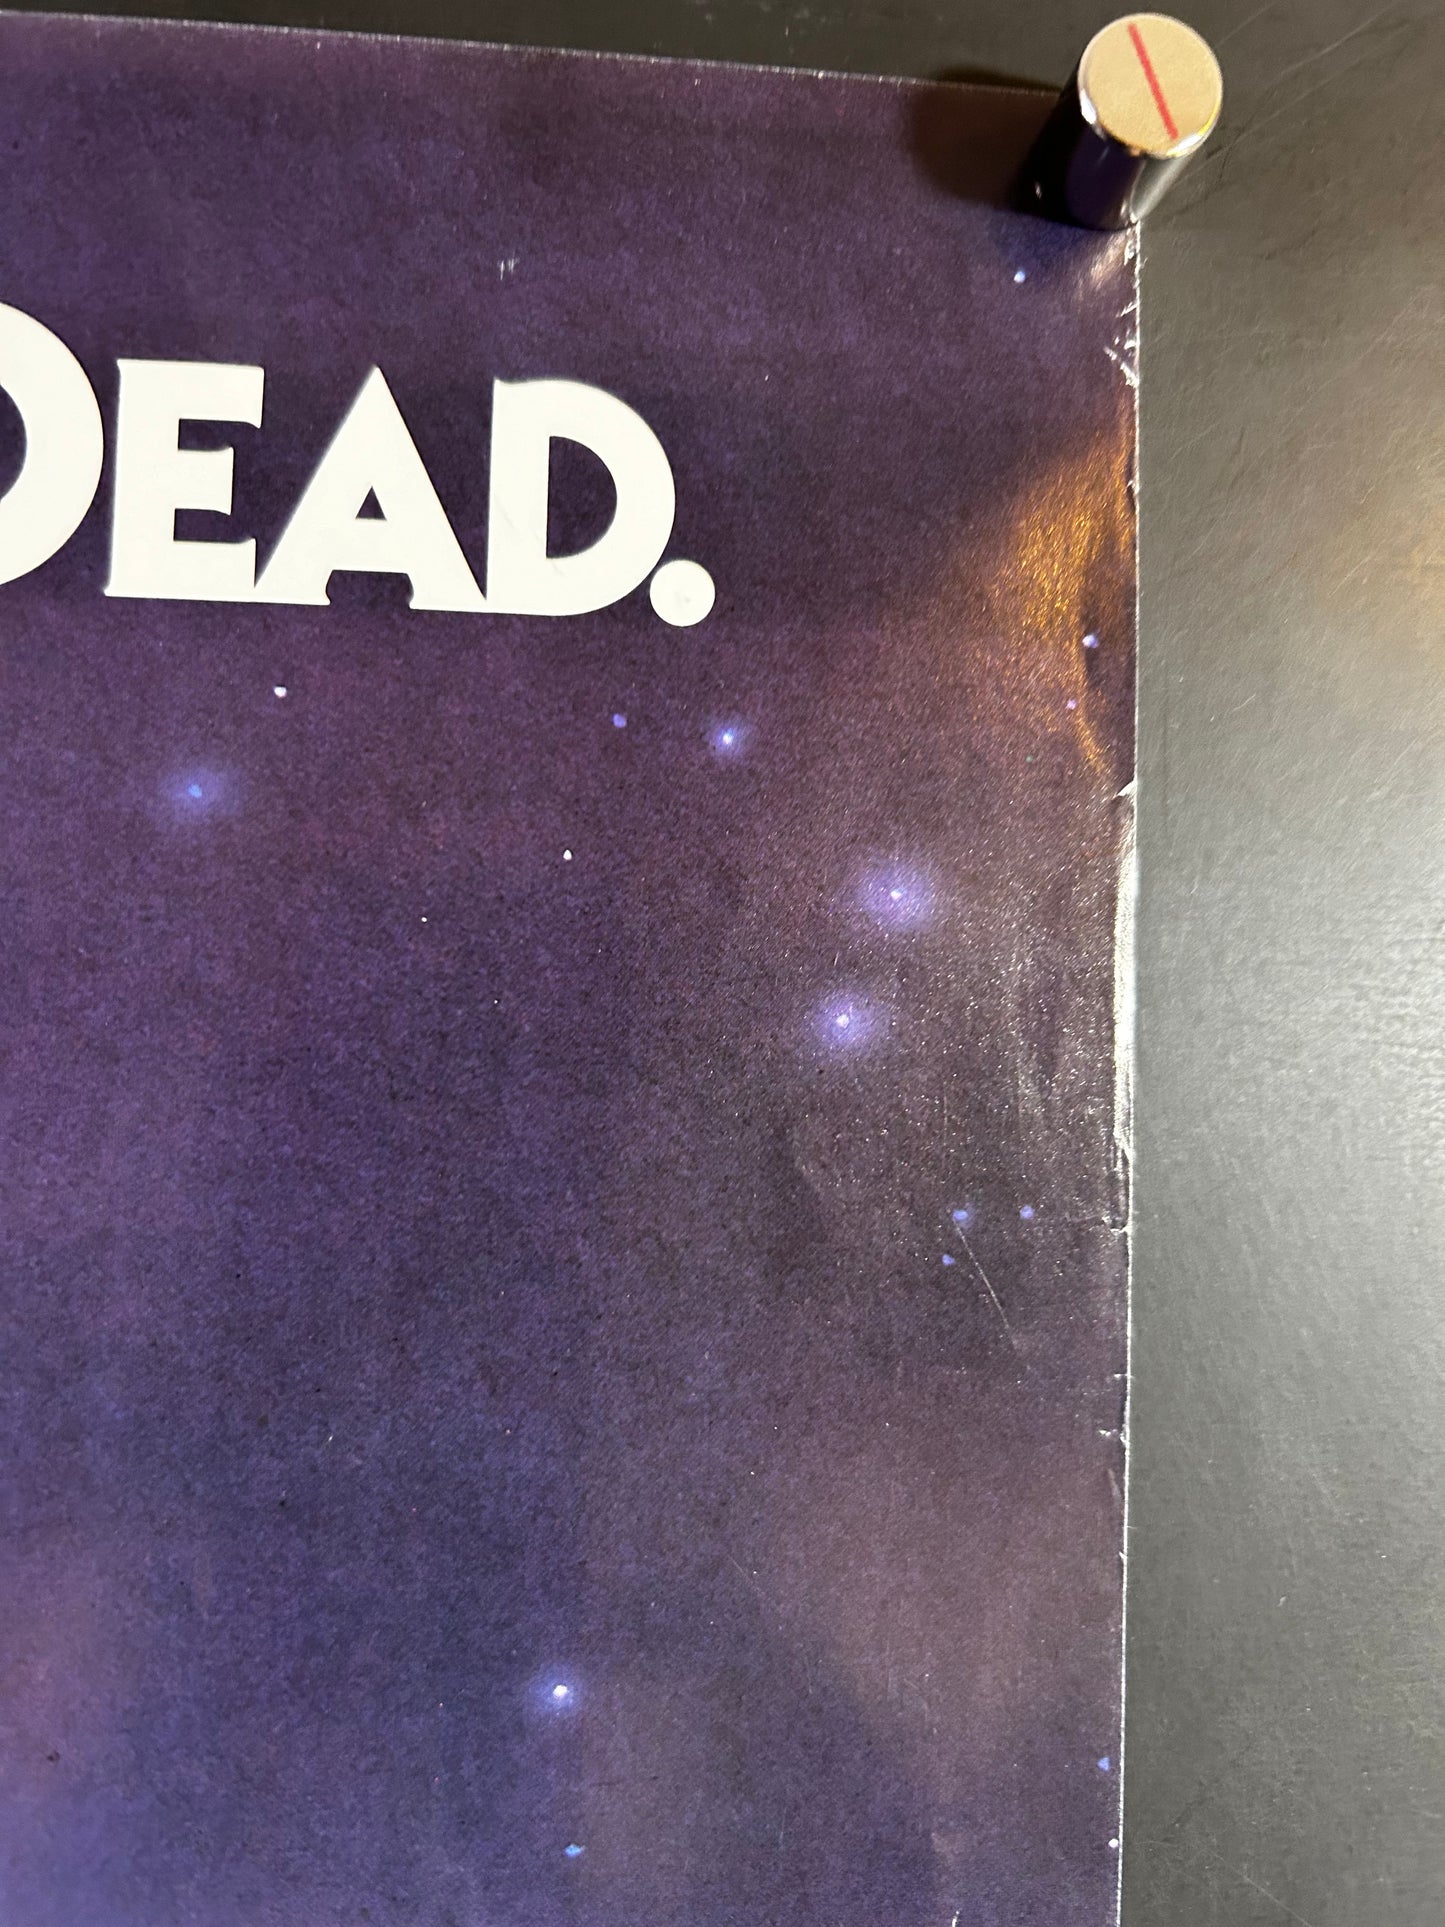 Return Of The Living Dead 2 Original One Sheet Poster 1988